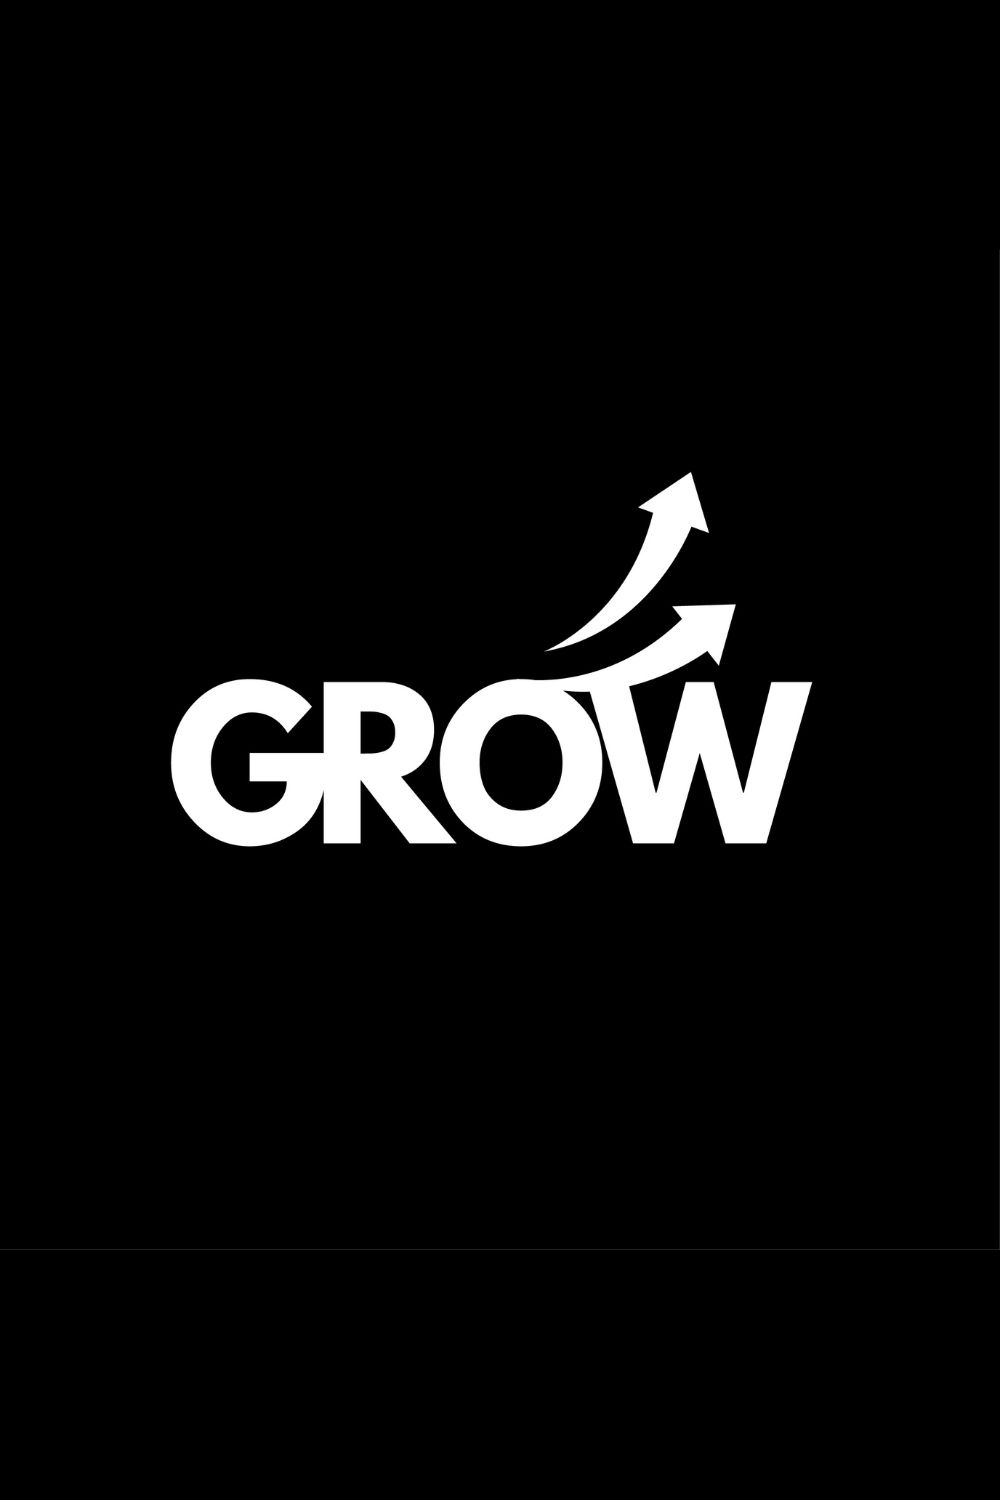 Letter GROW logo design pinterest preview image.